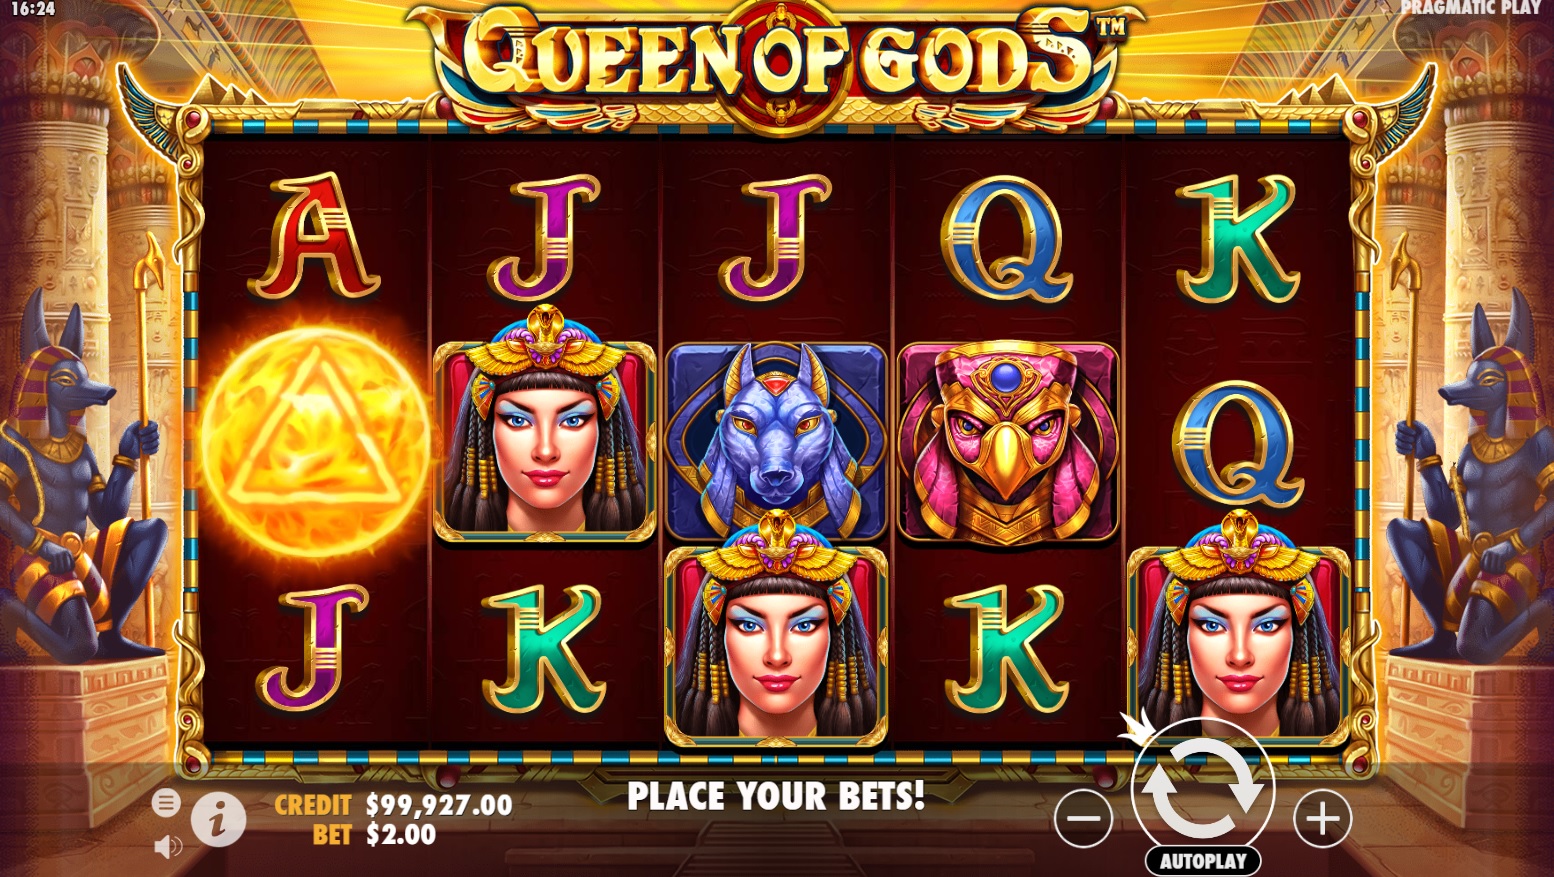 Queen of Gods, Base slot game